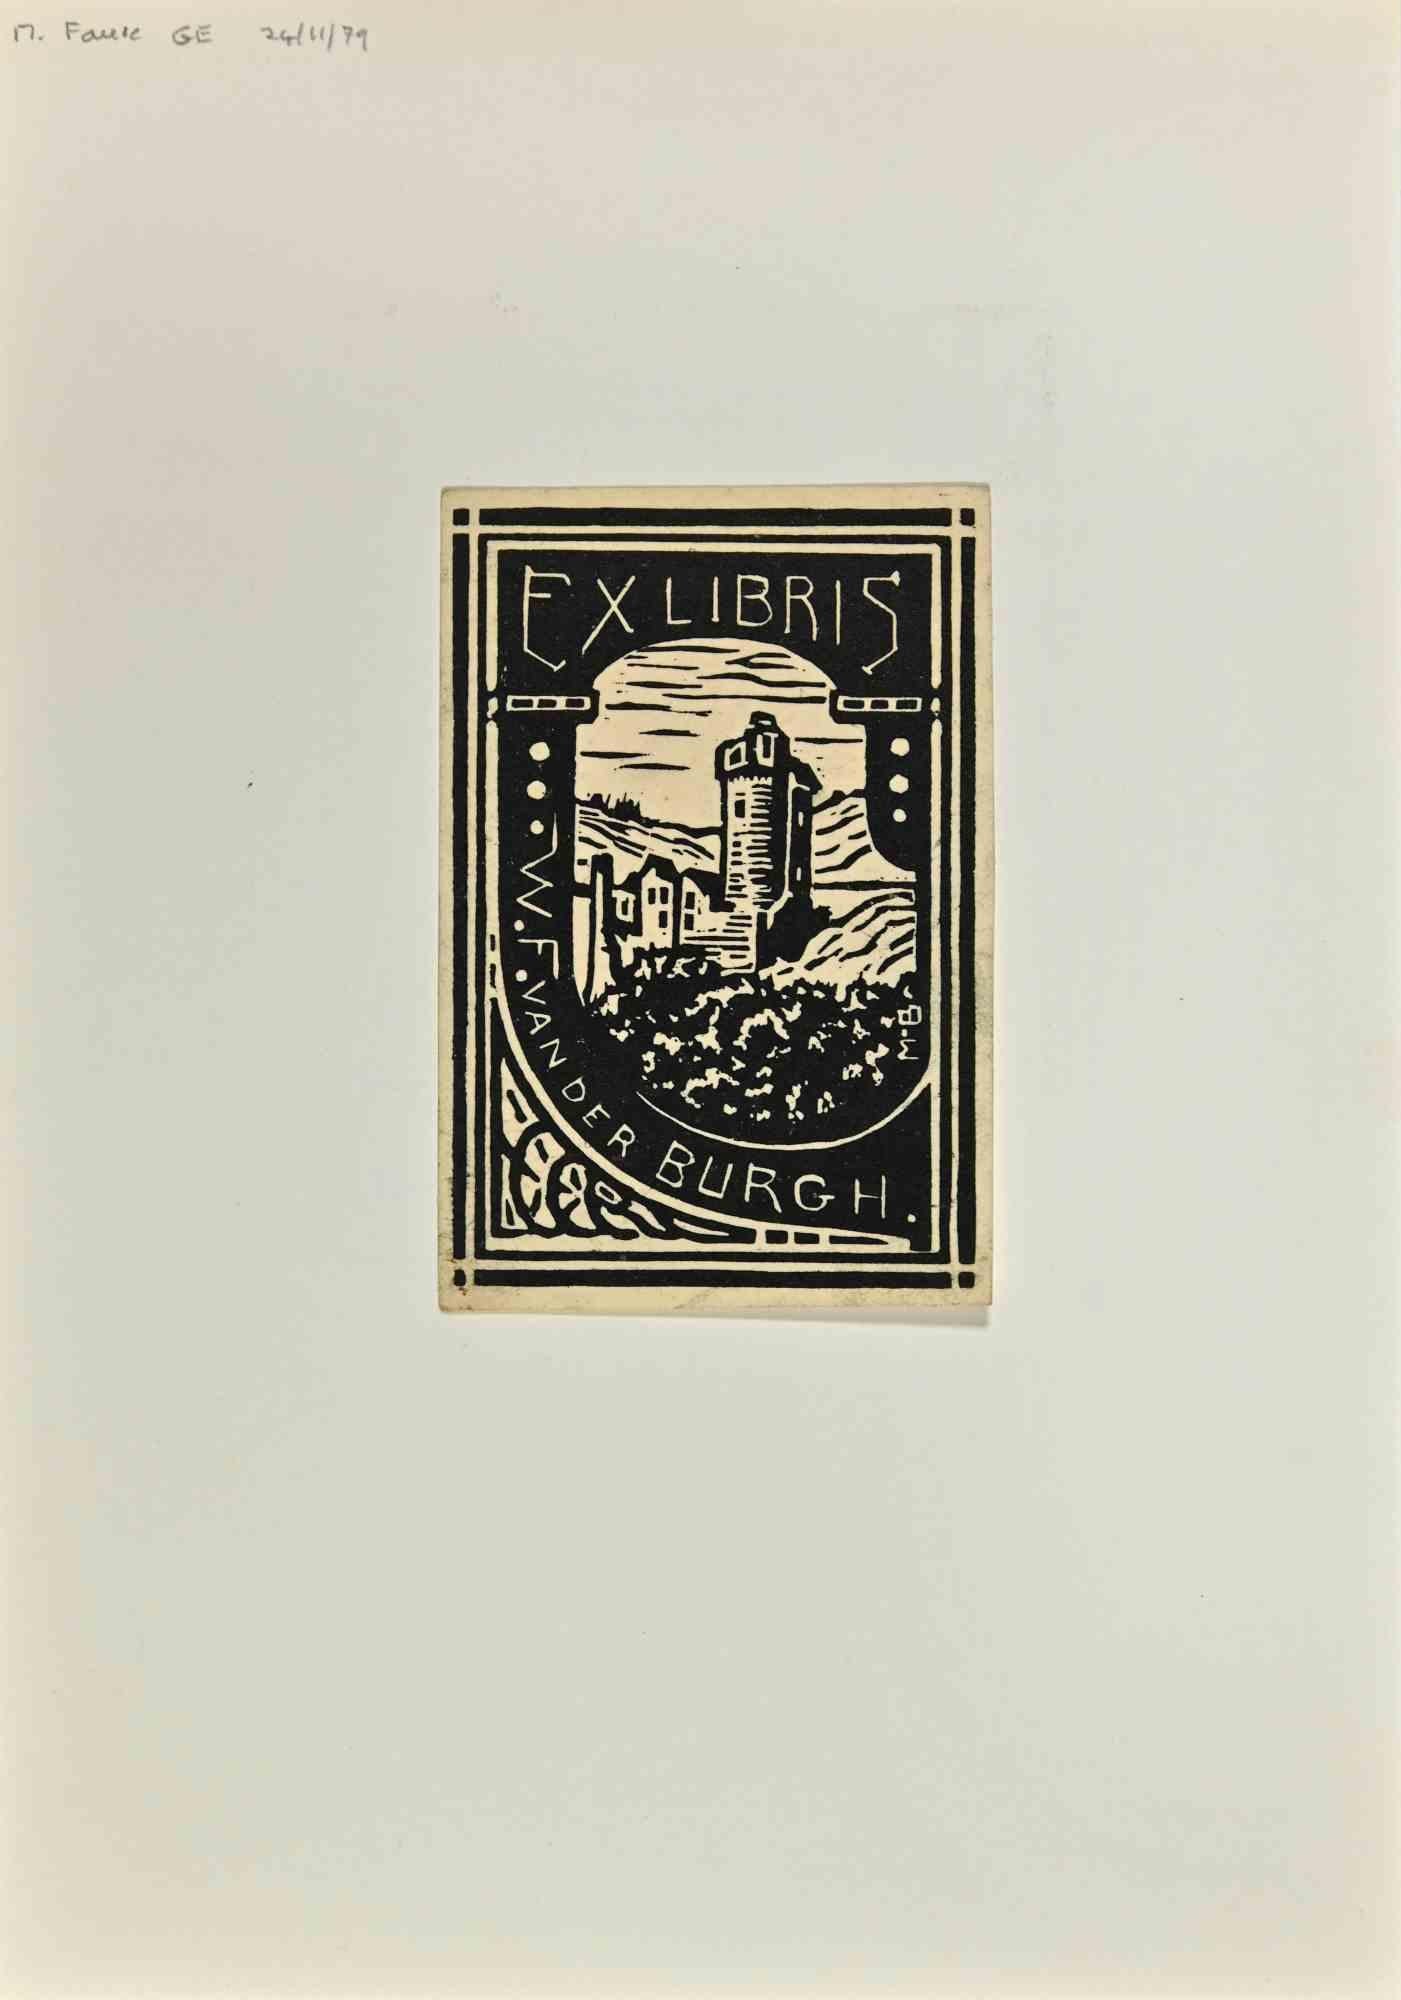  Ex Libris - Burgh - Woodcut - Mid 20th Century - Art by Unknown